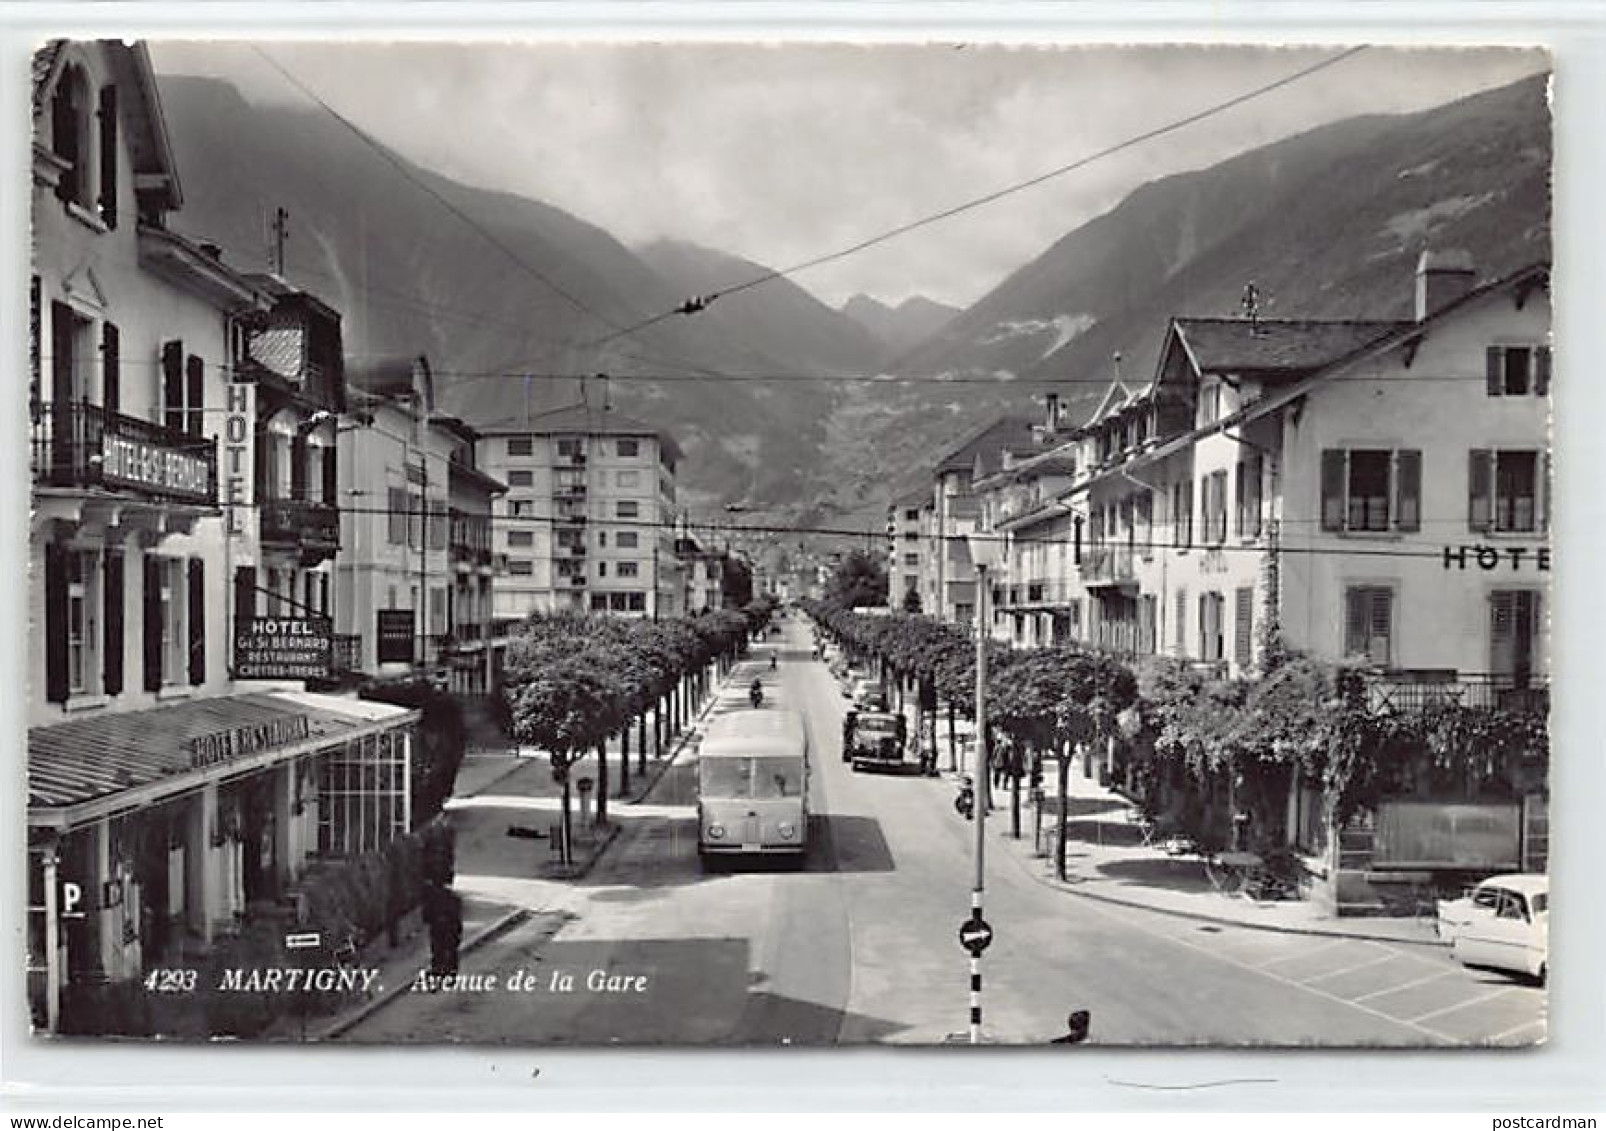 Suisse - Martigny (VS) Avenue De La Gare - Hotel Gd. St. Bernard - Ed. Sartori 4293 - Martigny